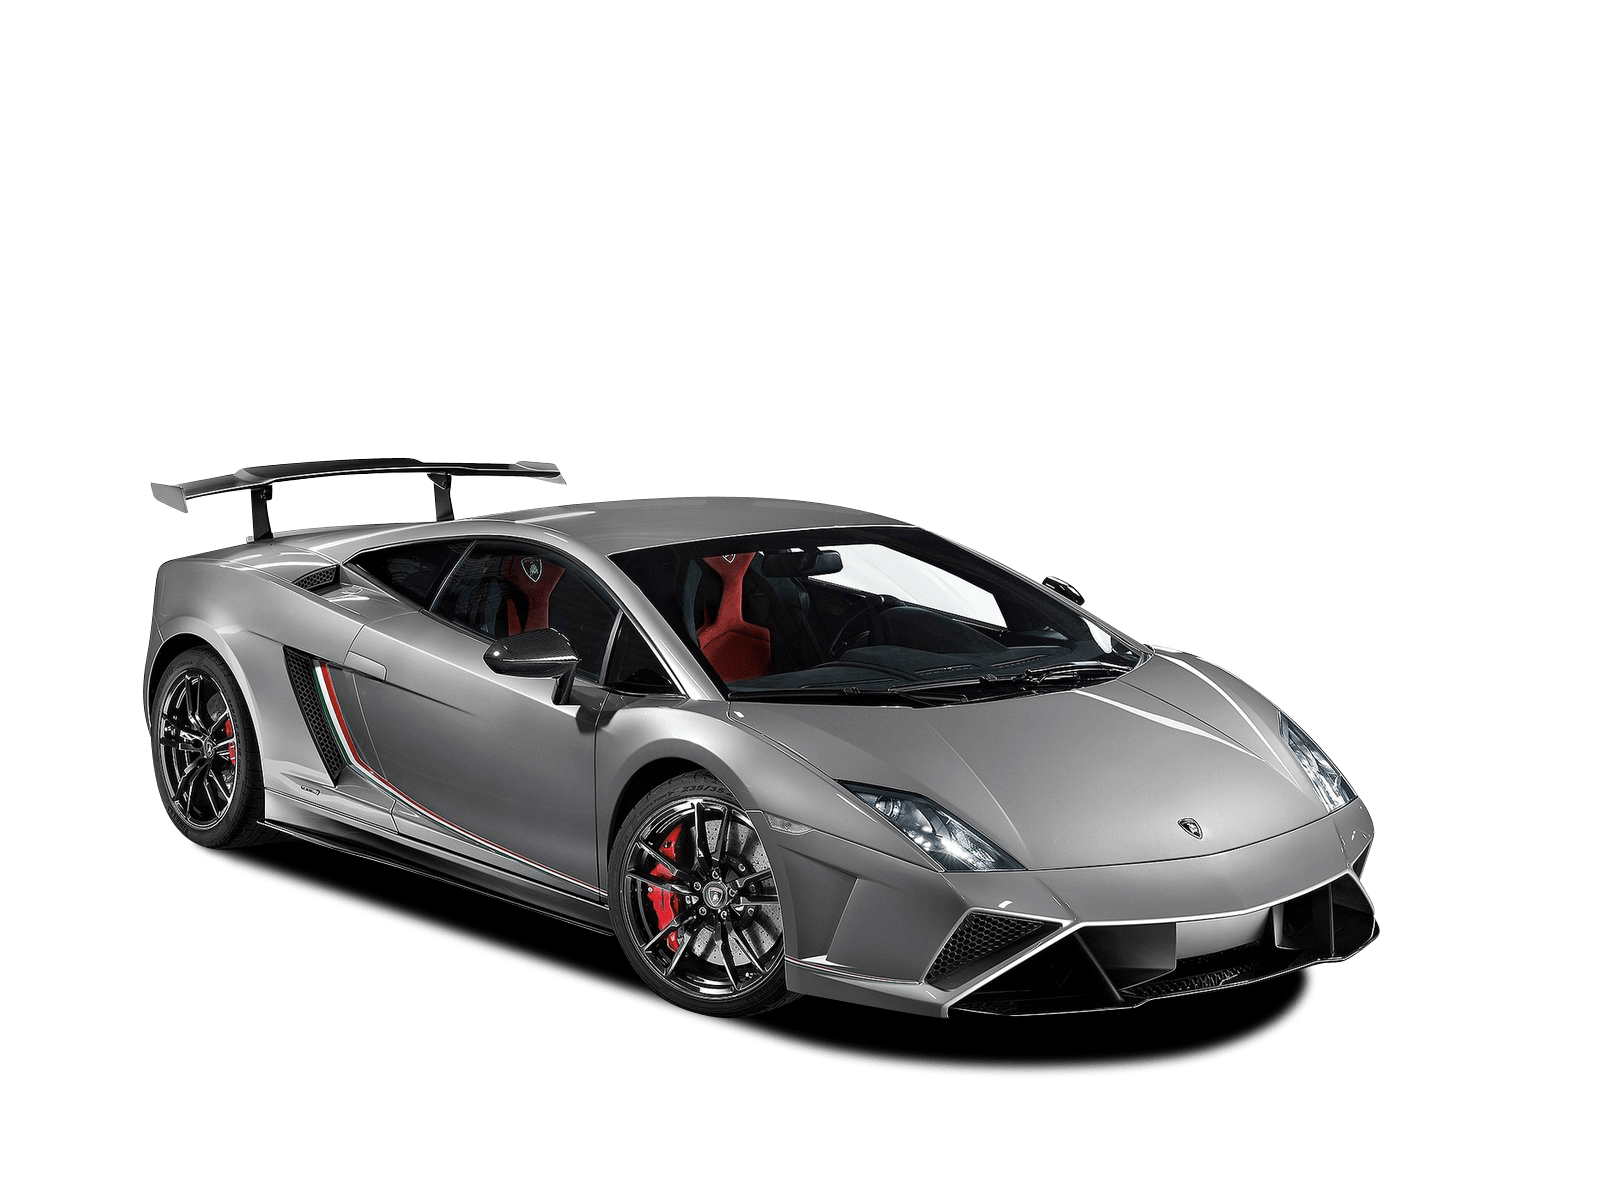 Lamborghini aventador conversível PNG free download